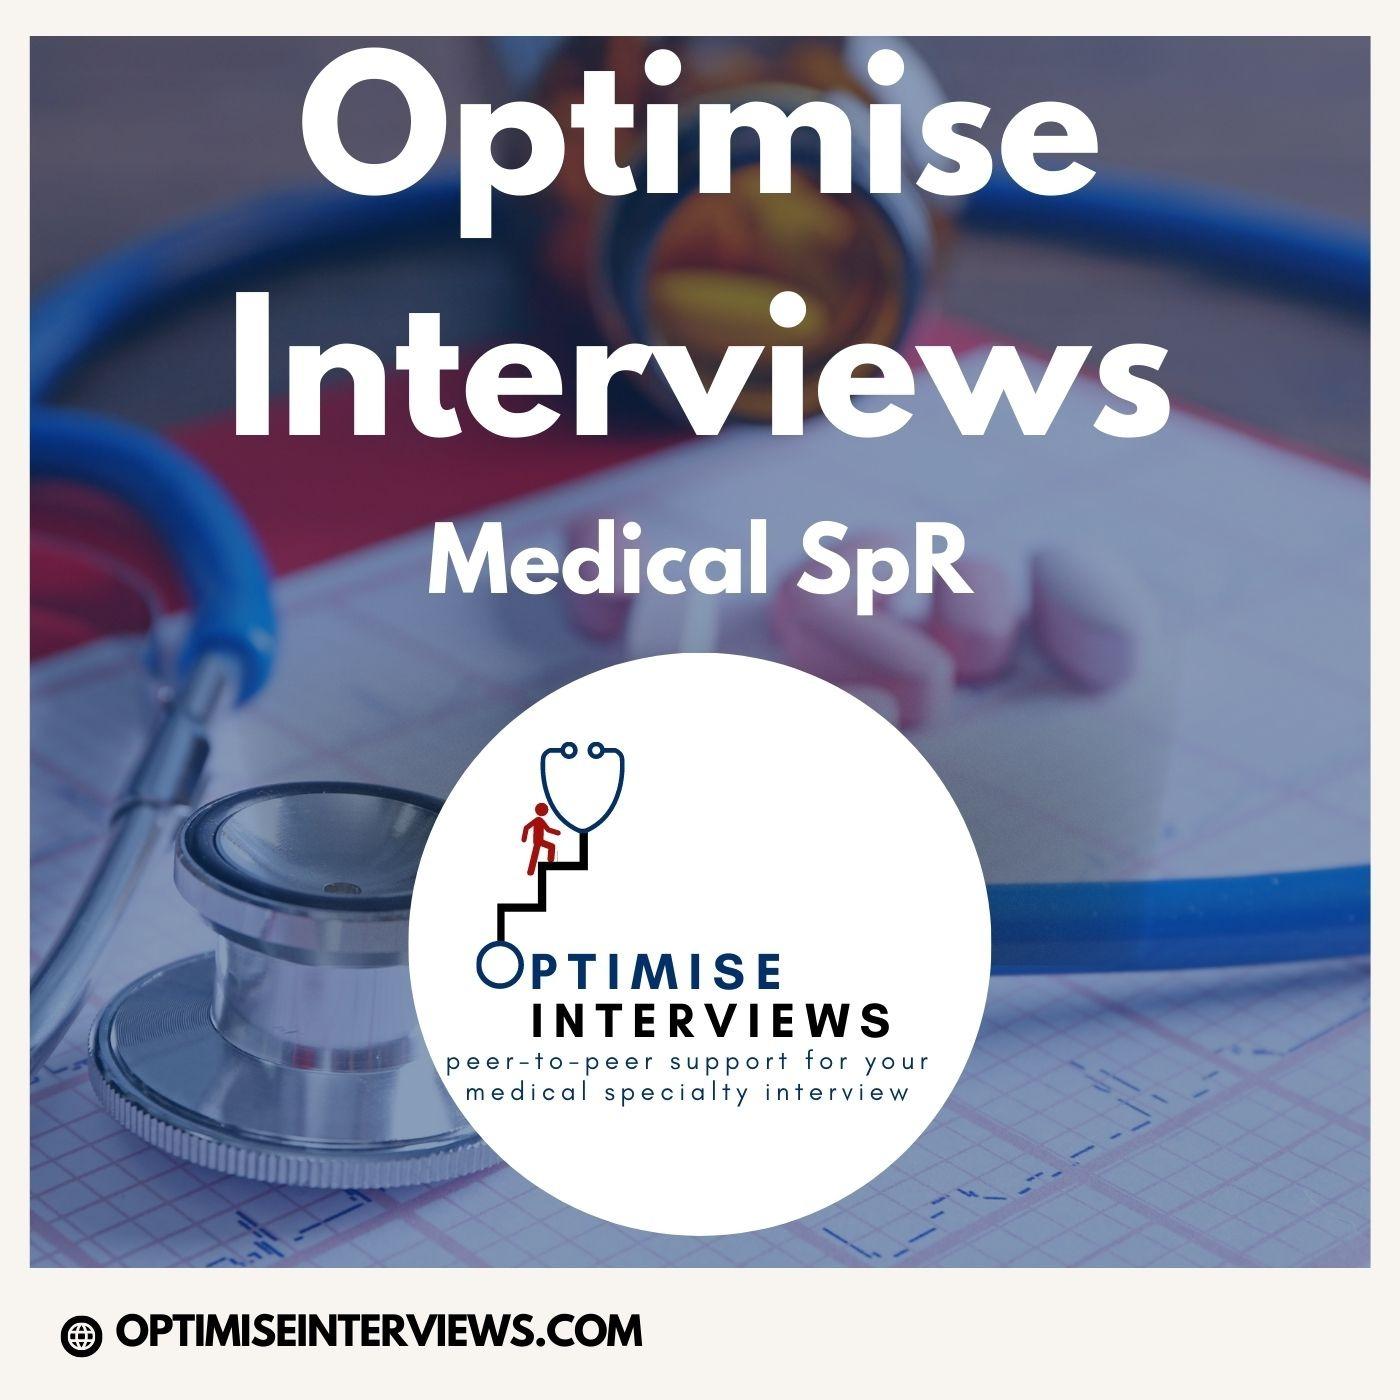 Optimise Interviews - Medical SpR